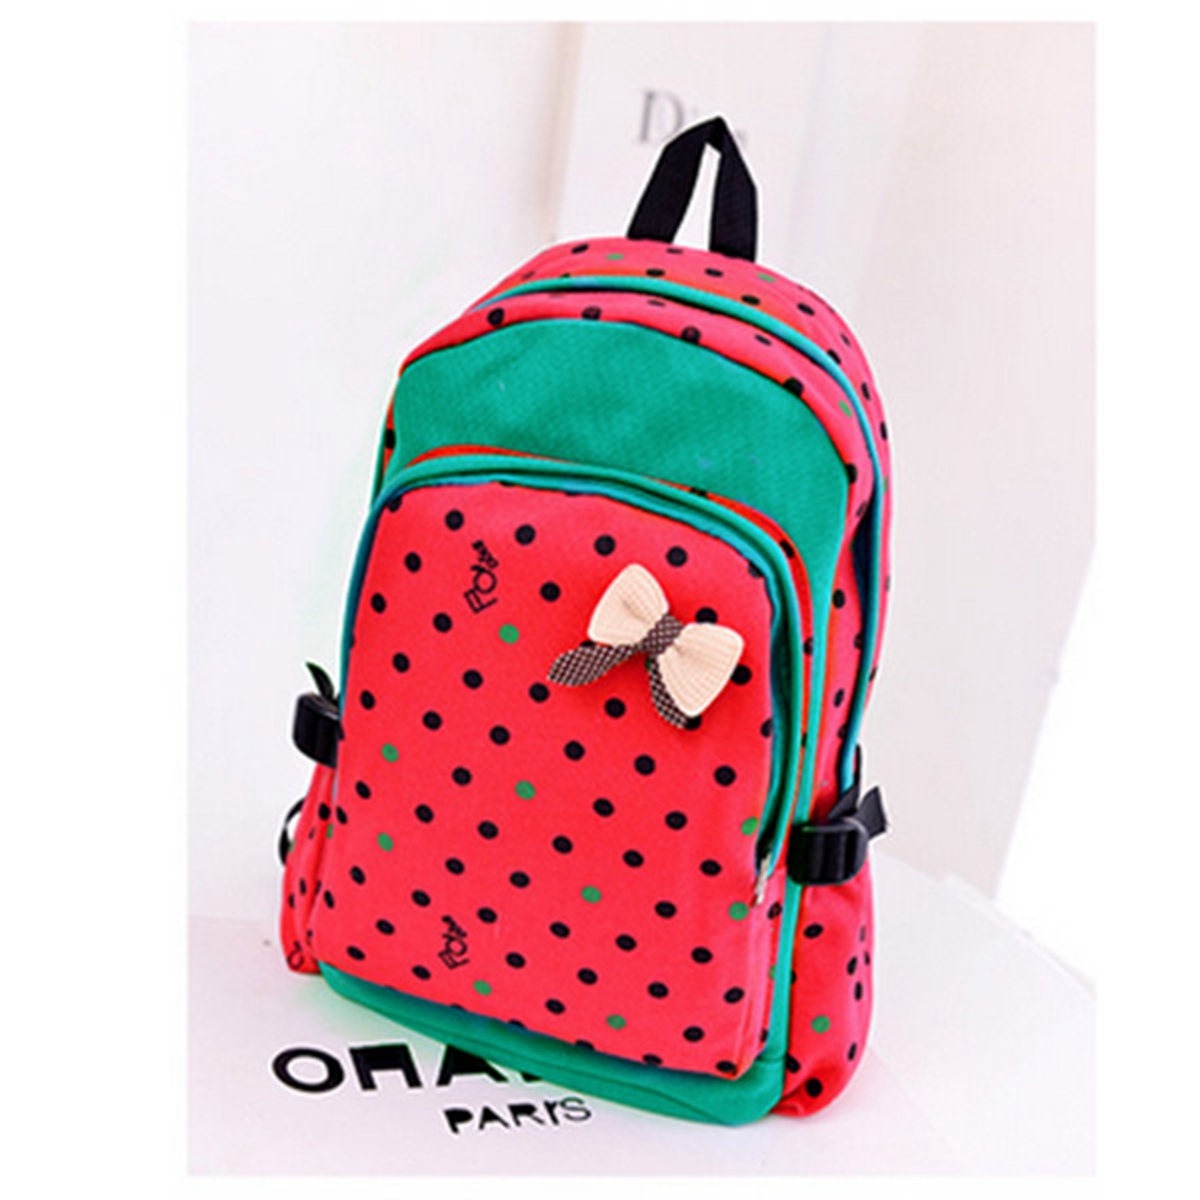 UK Lady Girl Bowknot Polka Dot Canvas Rucksack Gym School College Backpack Bag | eBay